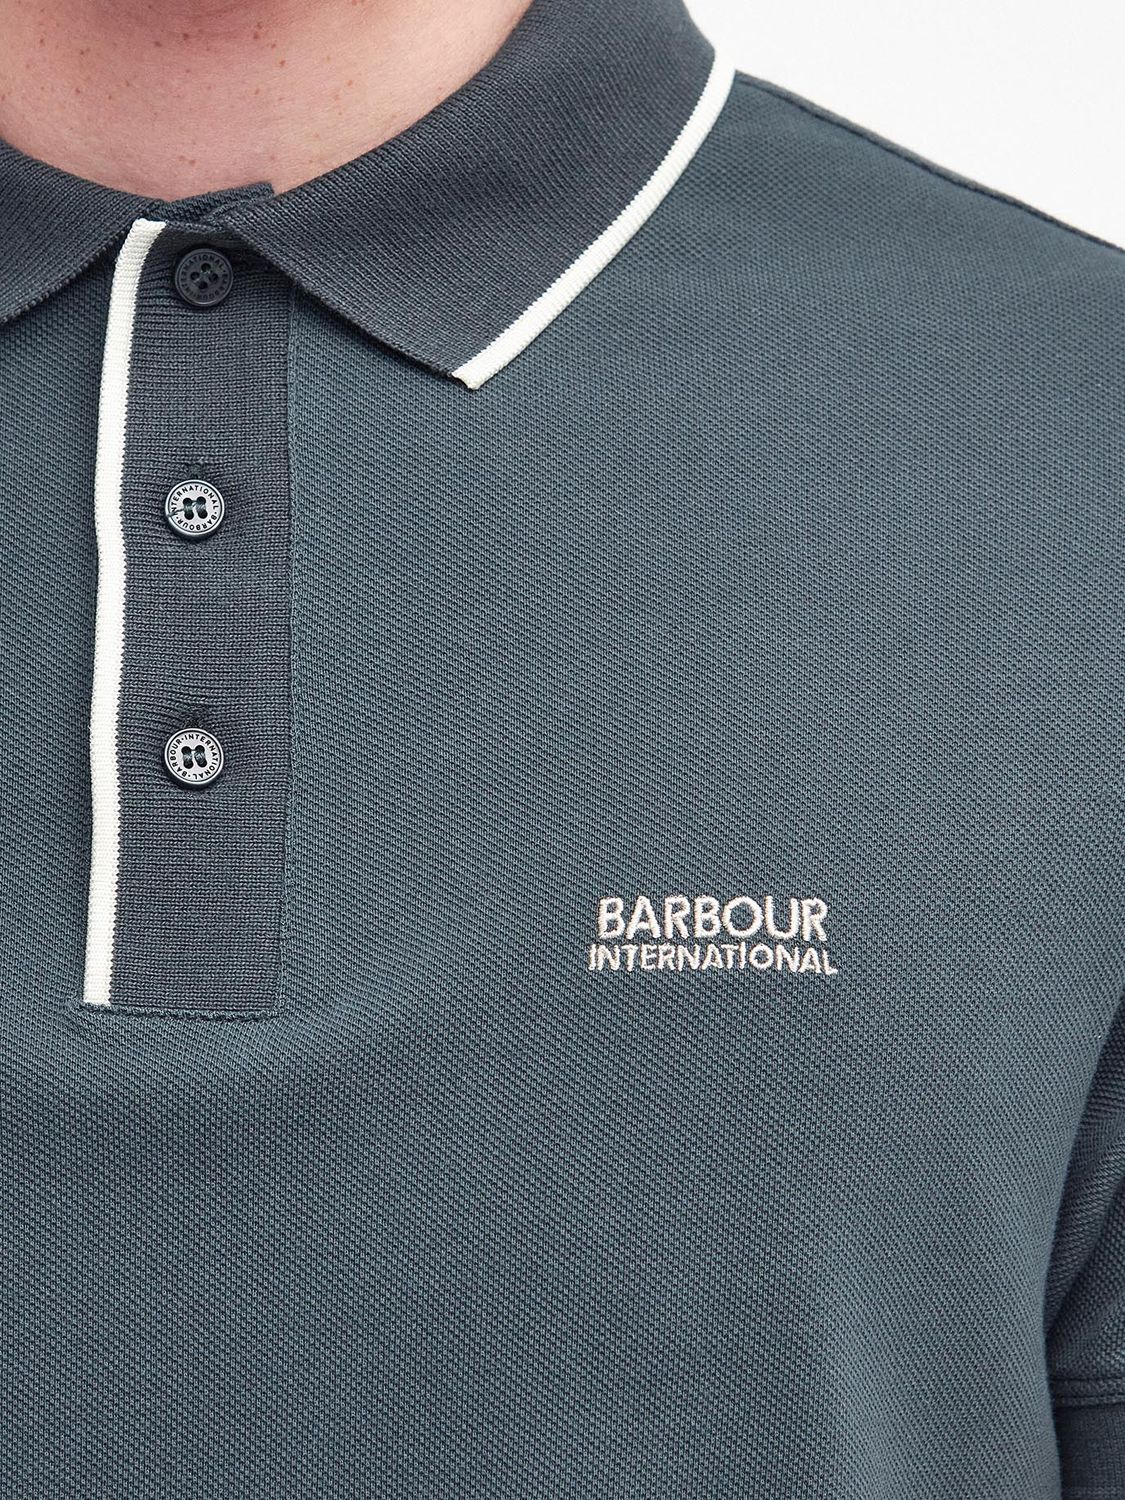 Barbour International Moor Polo Shirt, Dark Green at John Lewis & Partners